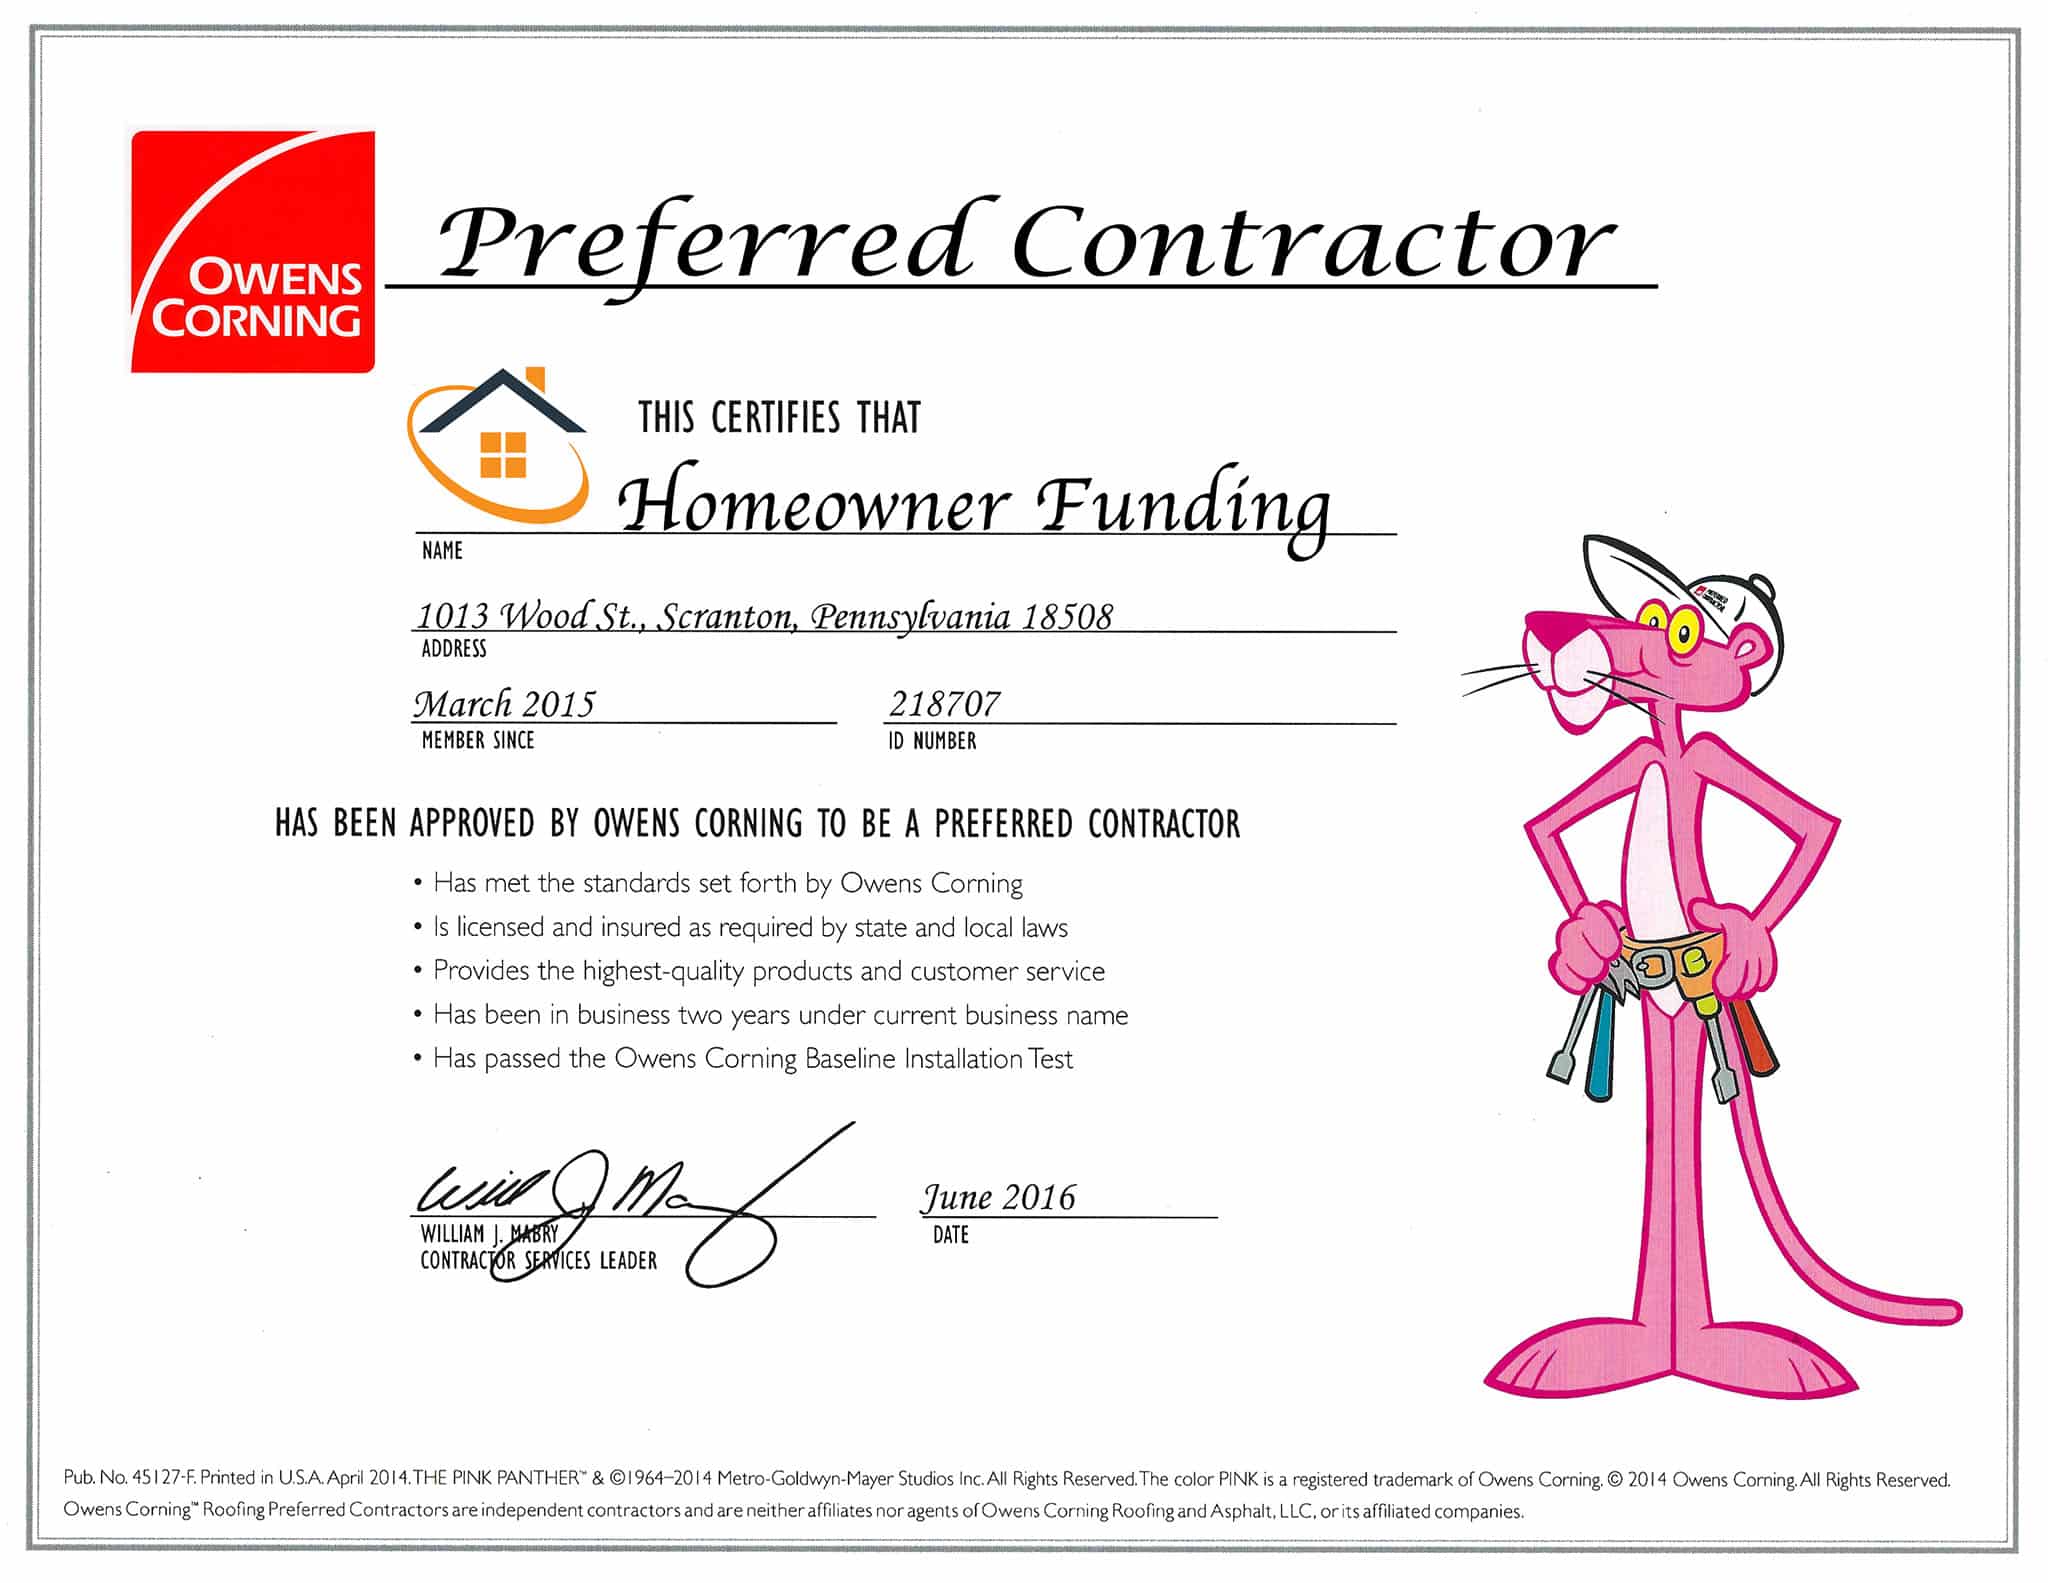 Preferred_Contractor_Owens_Corning_Certificate_web